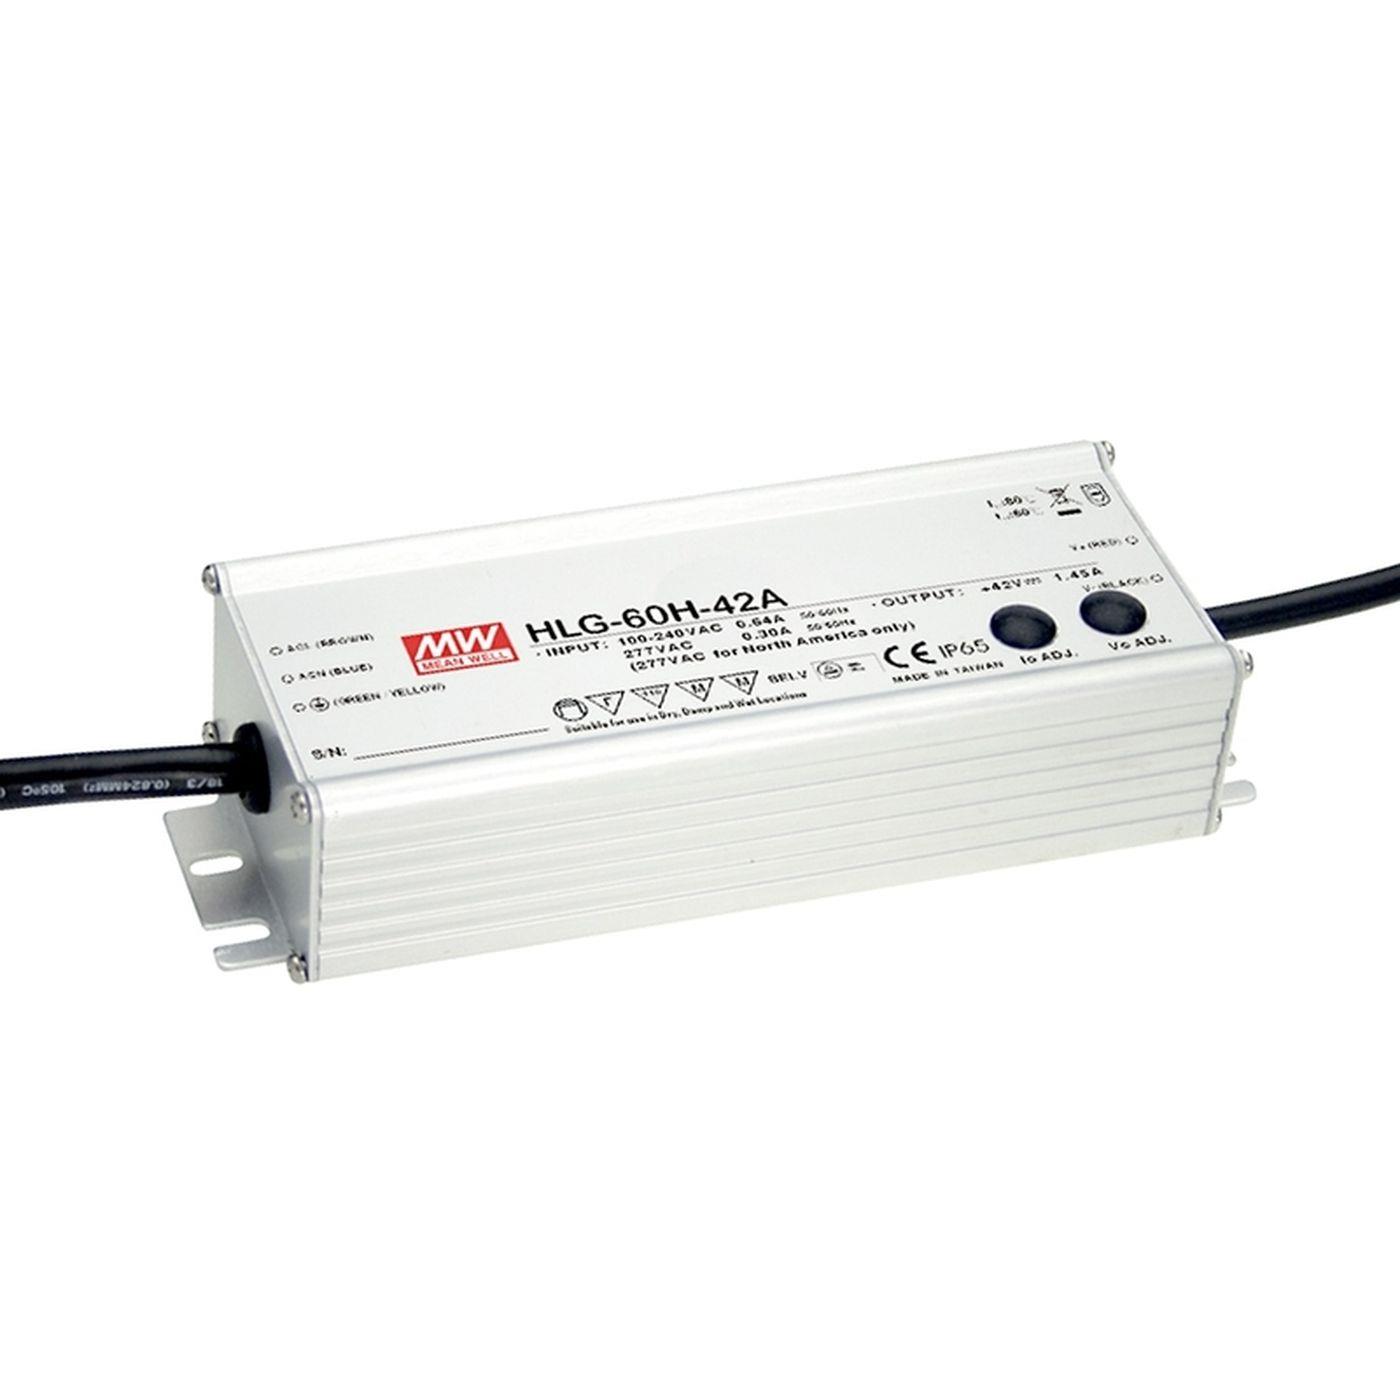 HLG-60H-24A 60W 24V 2,5A LED power supply Transformer Driver IP65